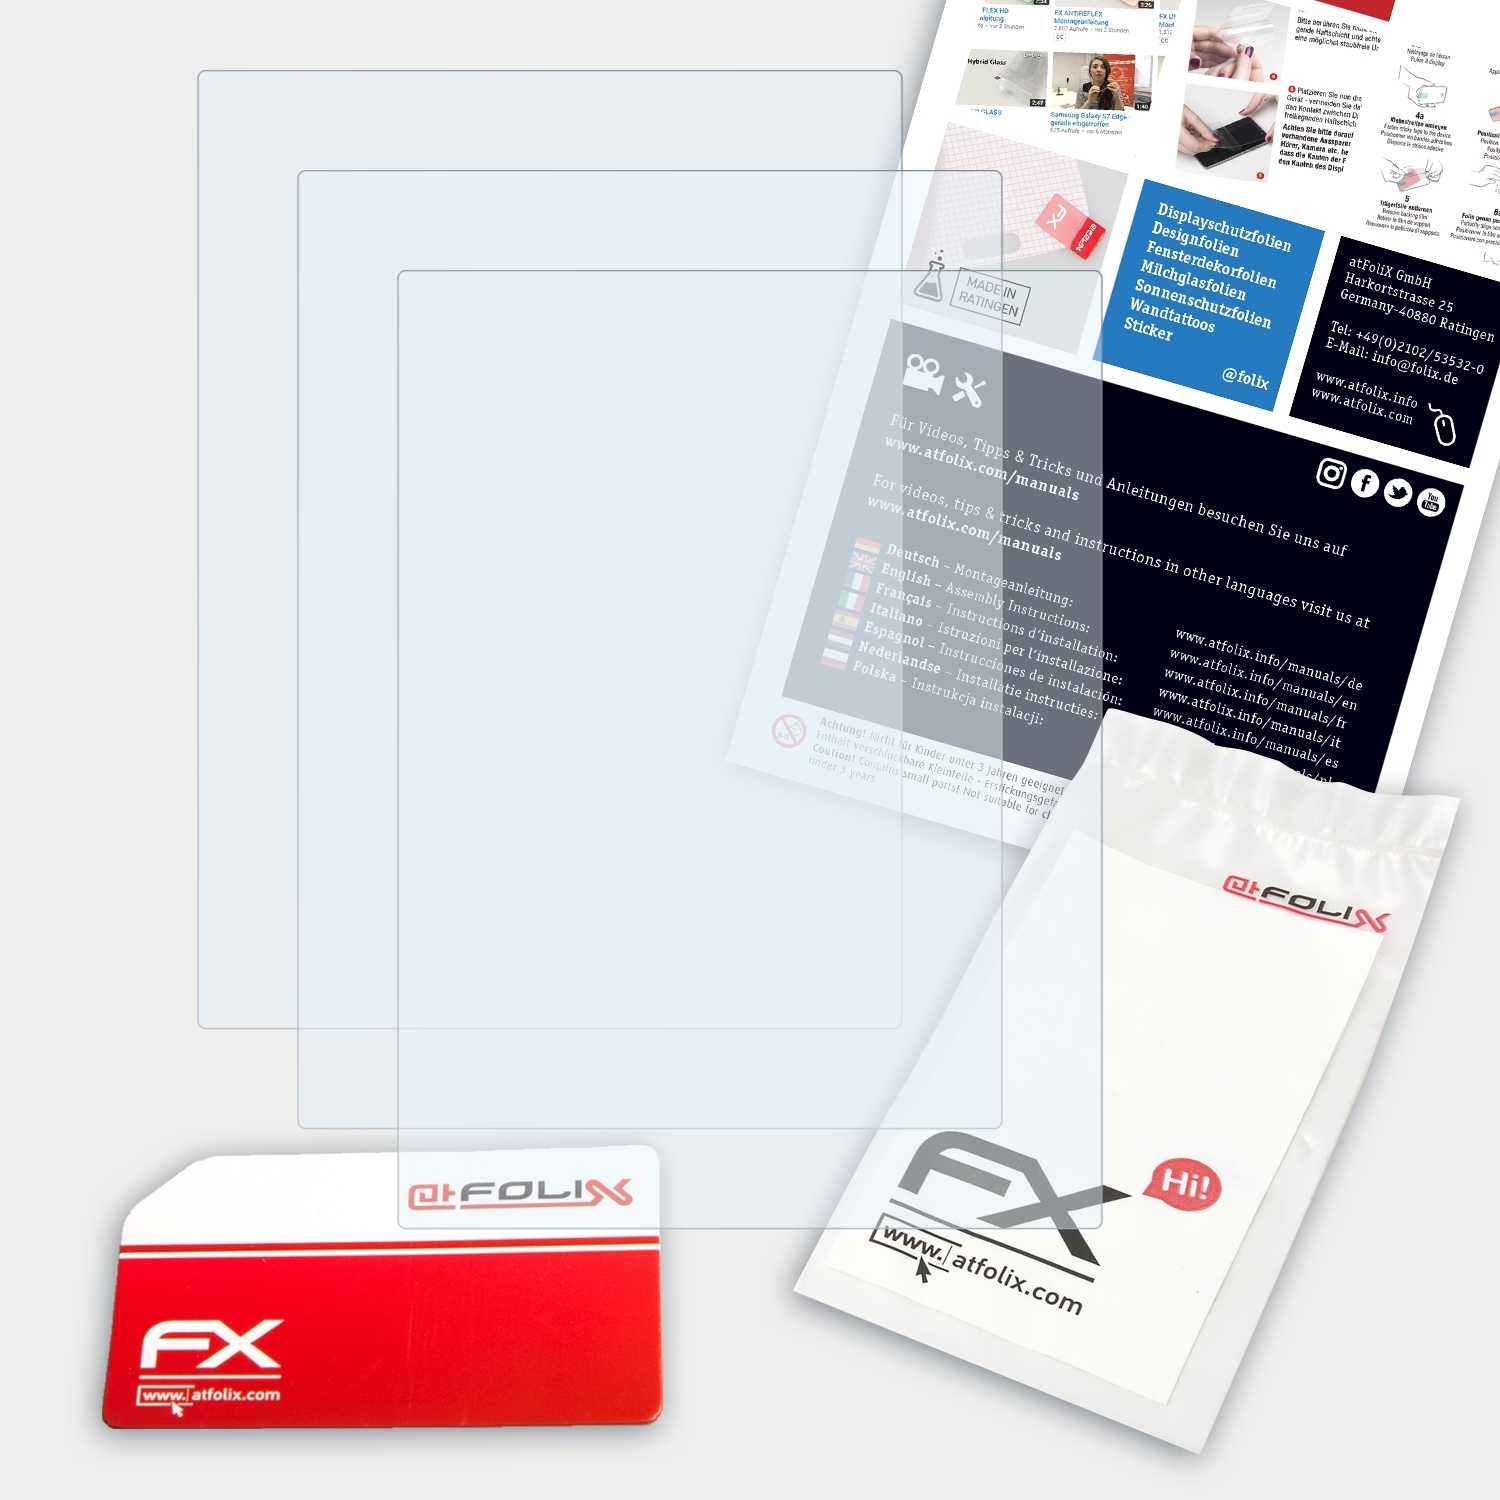 ATFOLIX 3x FX-Clear Alpha Sony Displayschutz(für a7C)